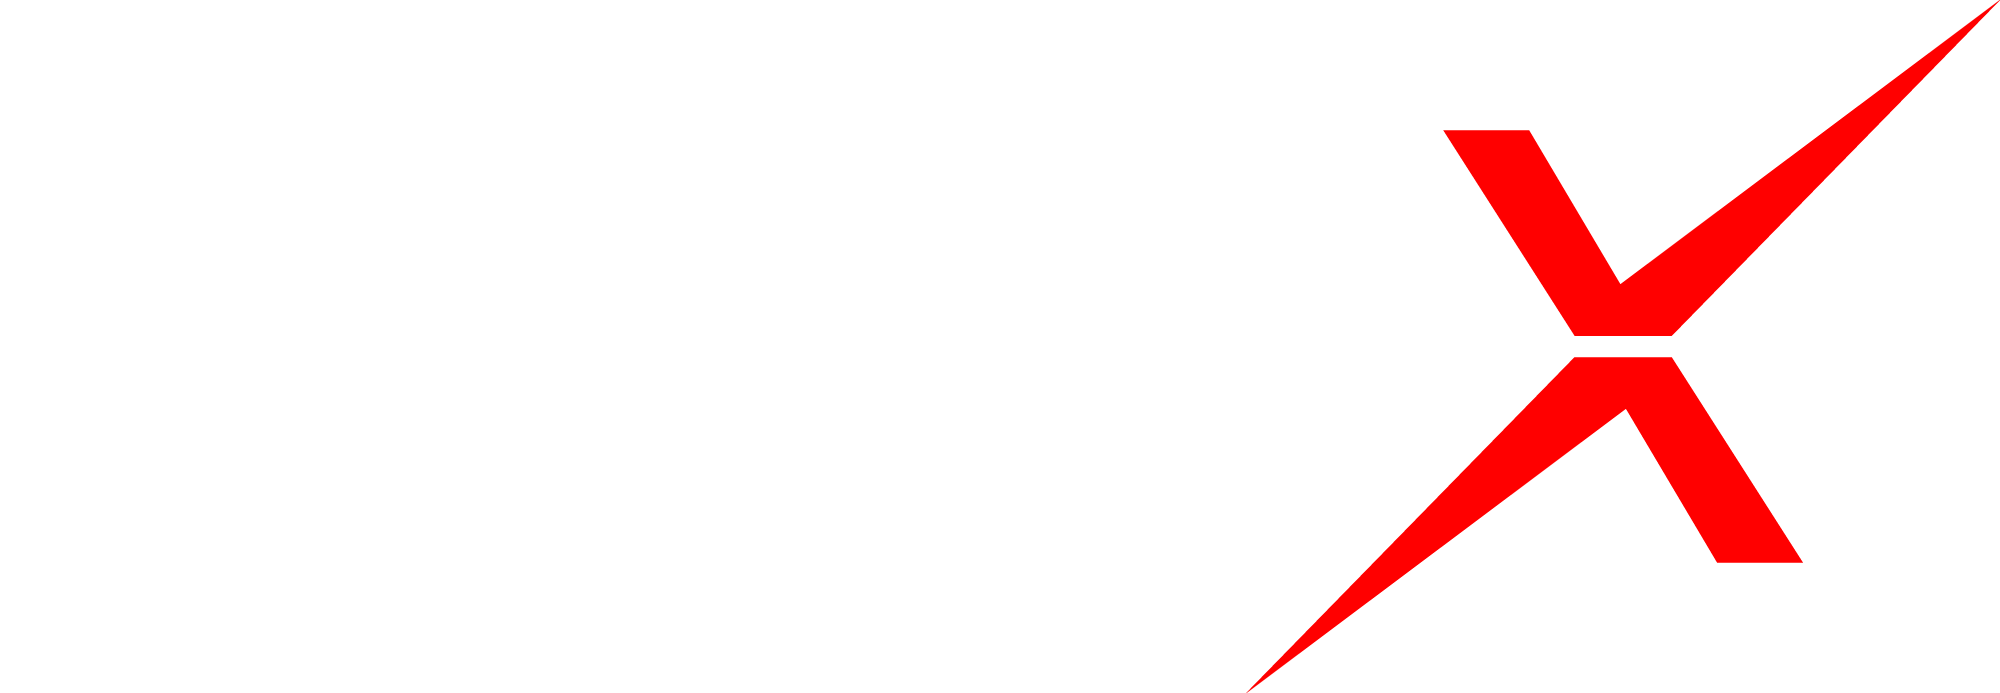 Zentrex logo